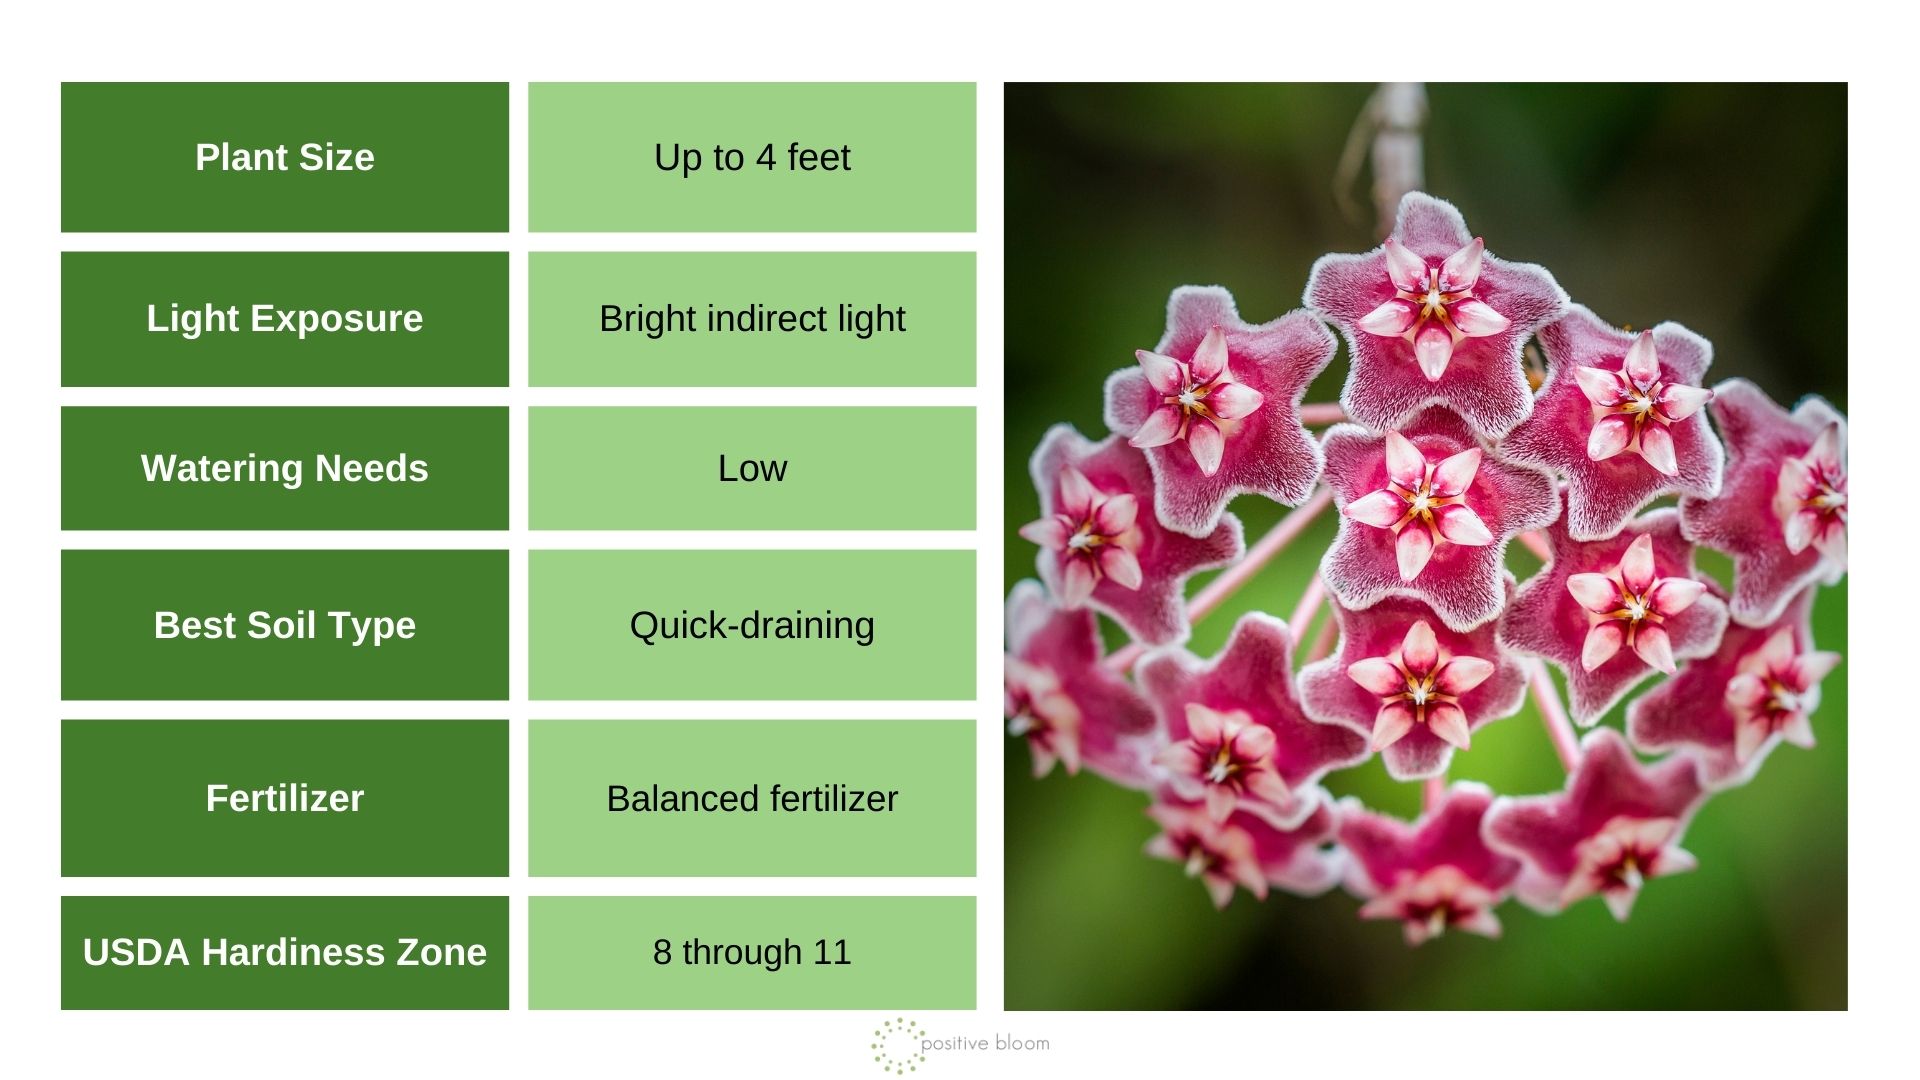 Wax Flower/Hoya info chart and photo